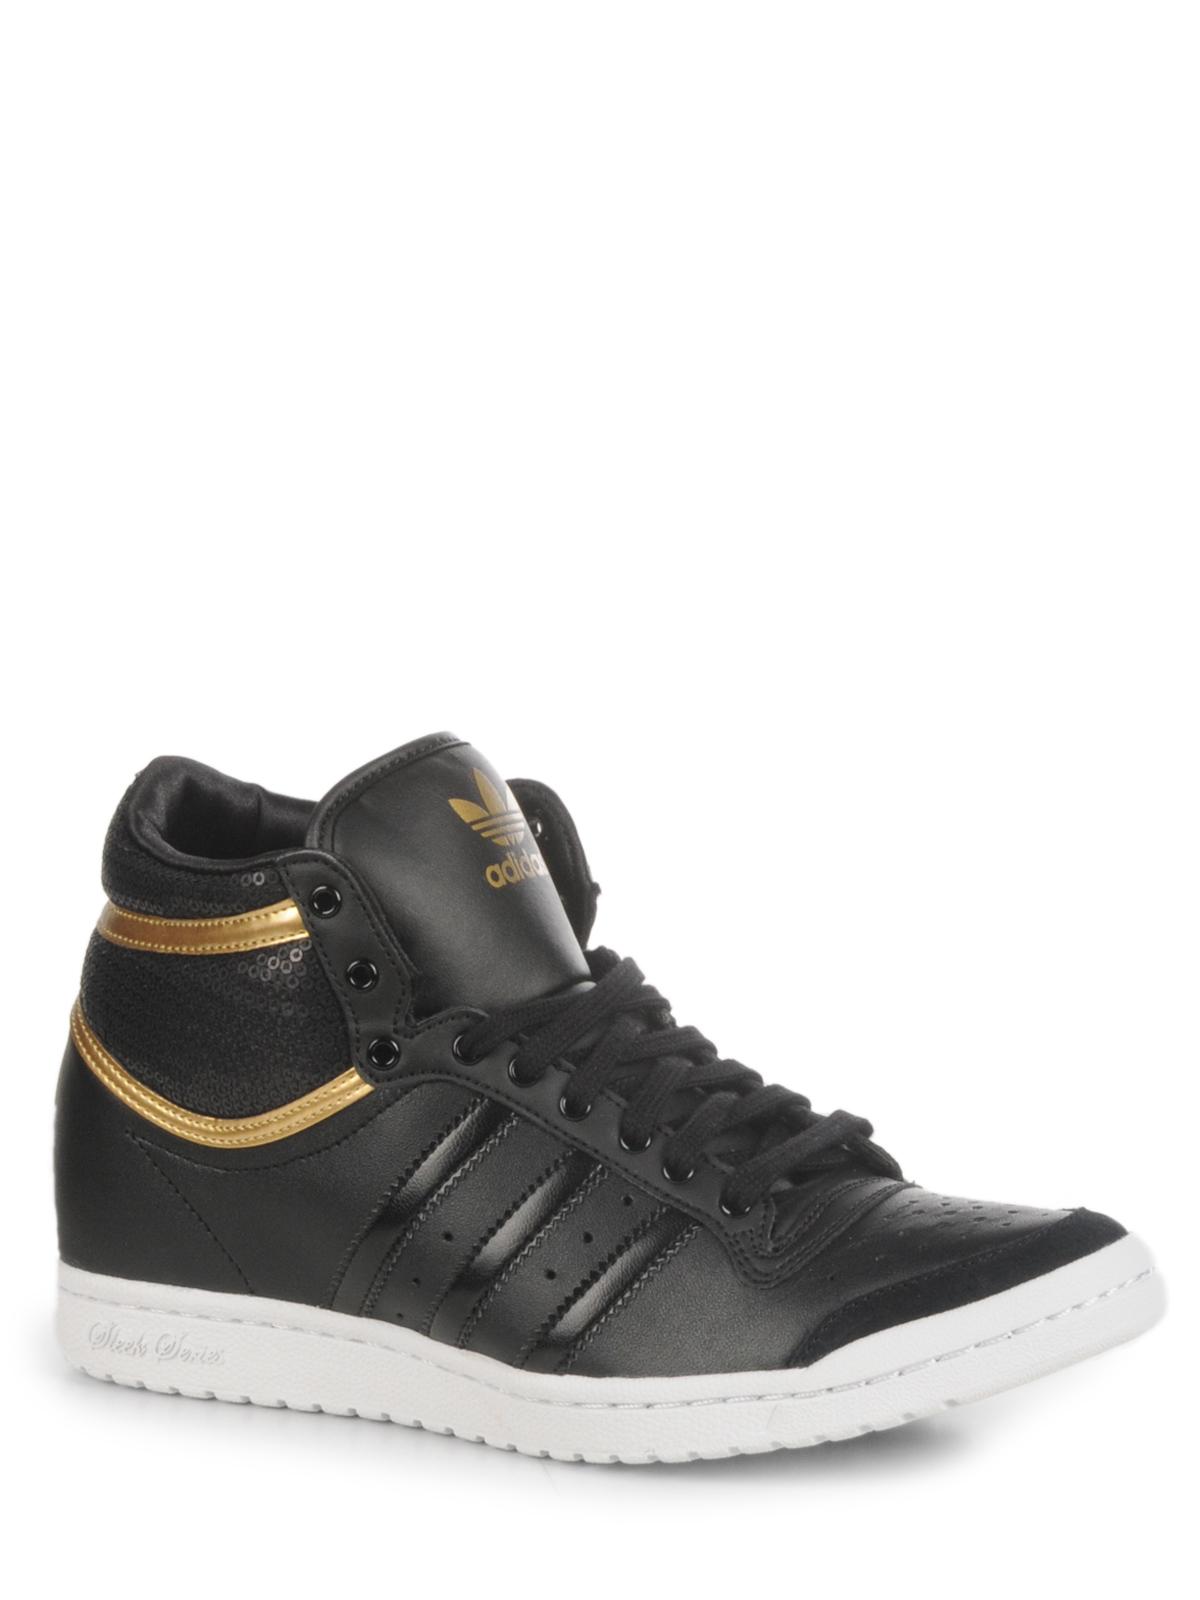 Foto Adidas Top Ten Hi Sleek W deportivas negro/negro/dorado metálico EU: 38 foto 1179